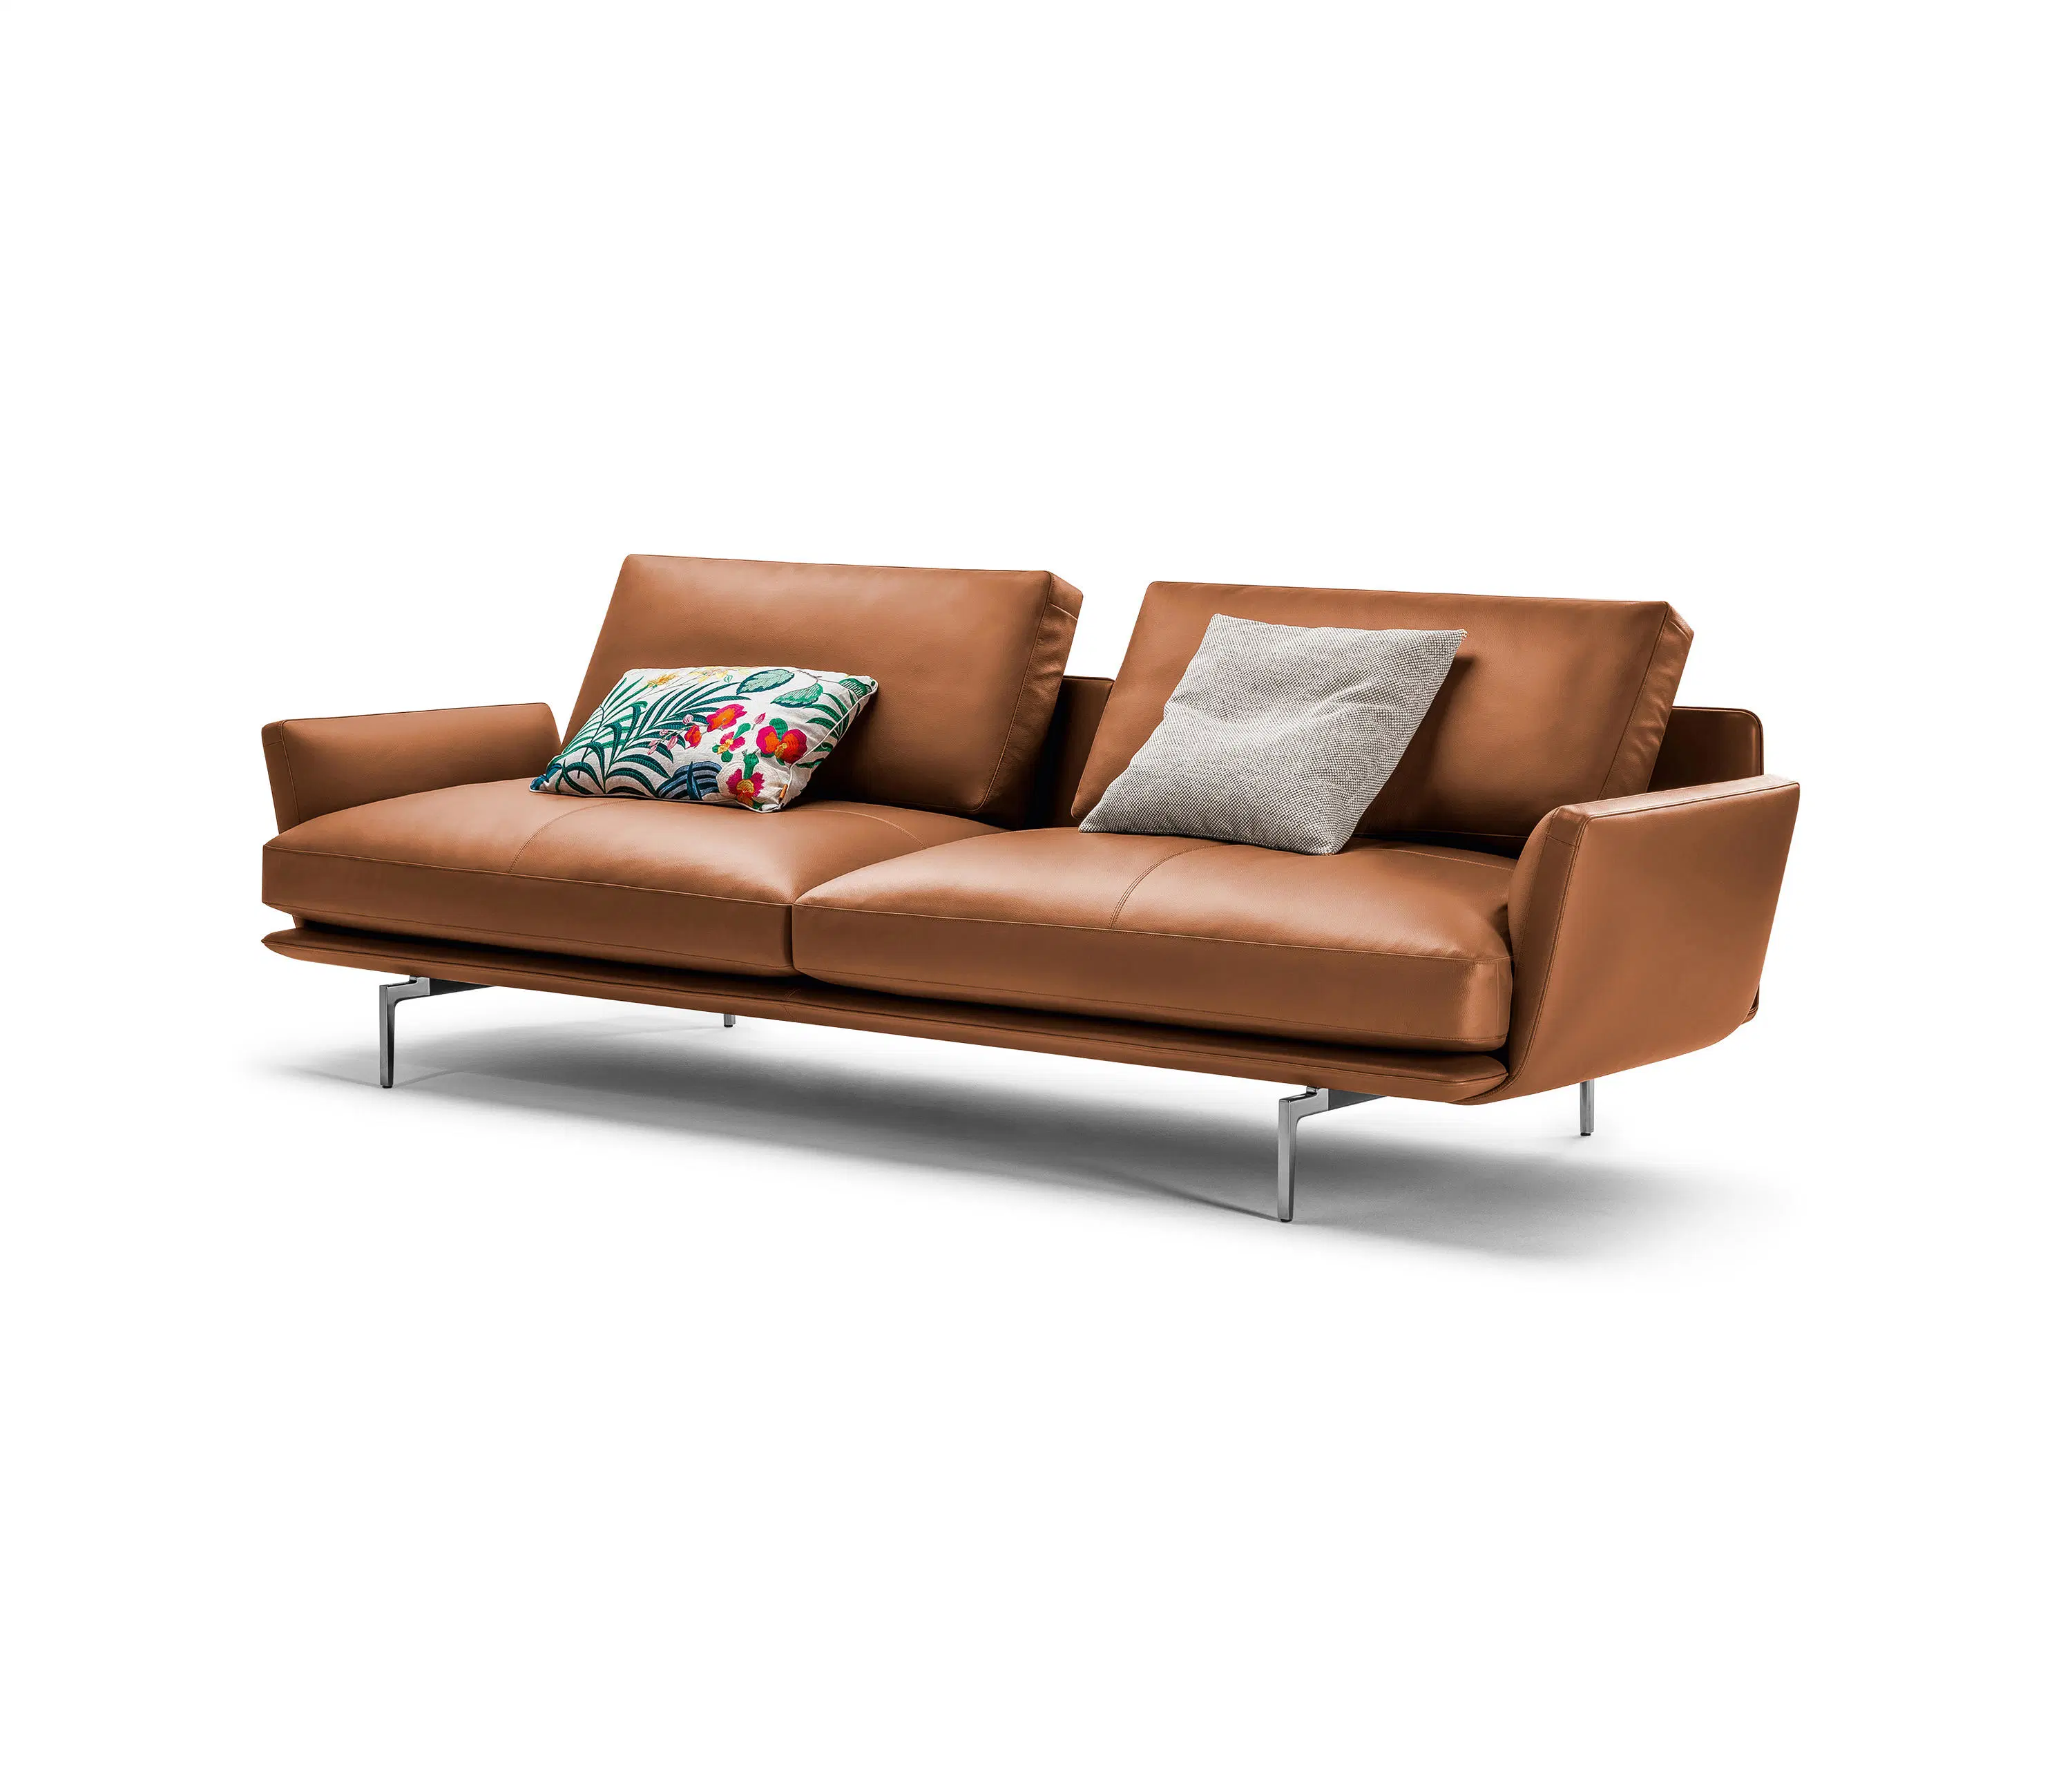 Luxury Italy Style Leather Sofa Office Sofa Home Sofas